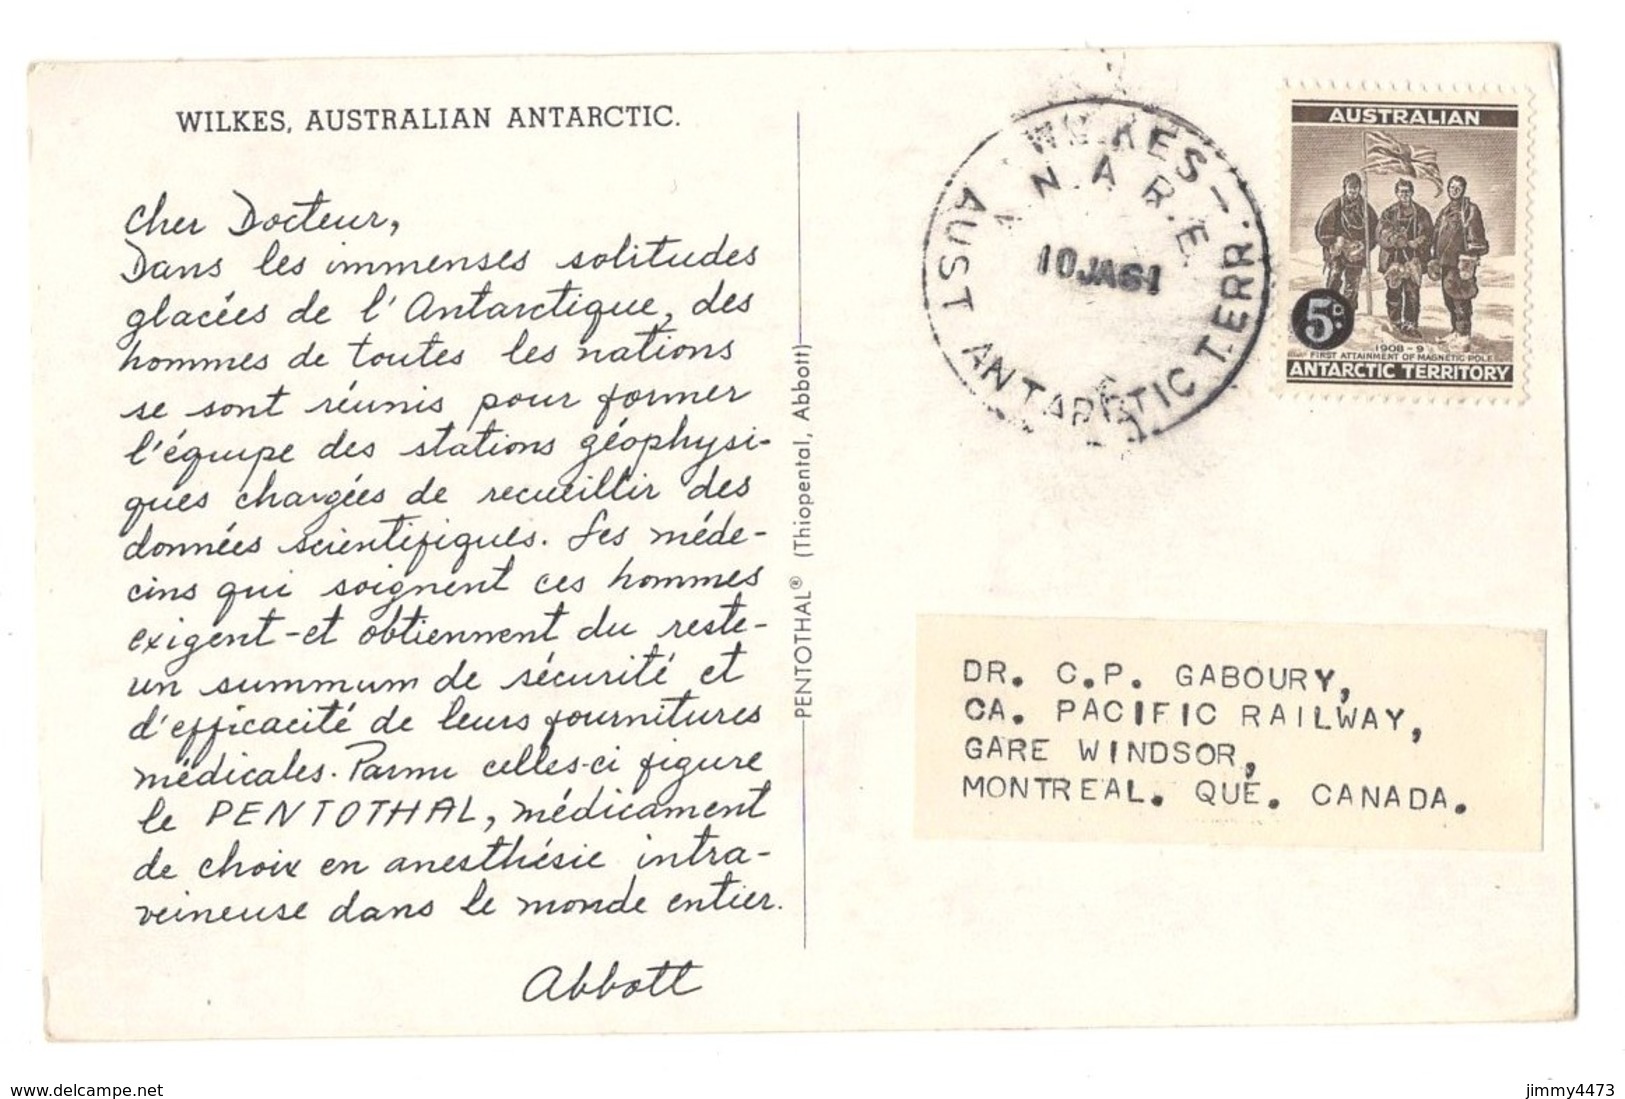 POST CARD Stamped - WILKES AUSTRALIAN ANTARCTIC - Adelaide